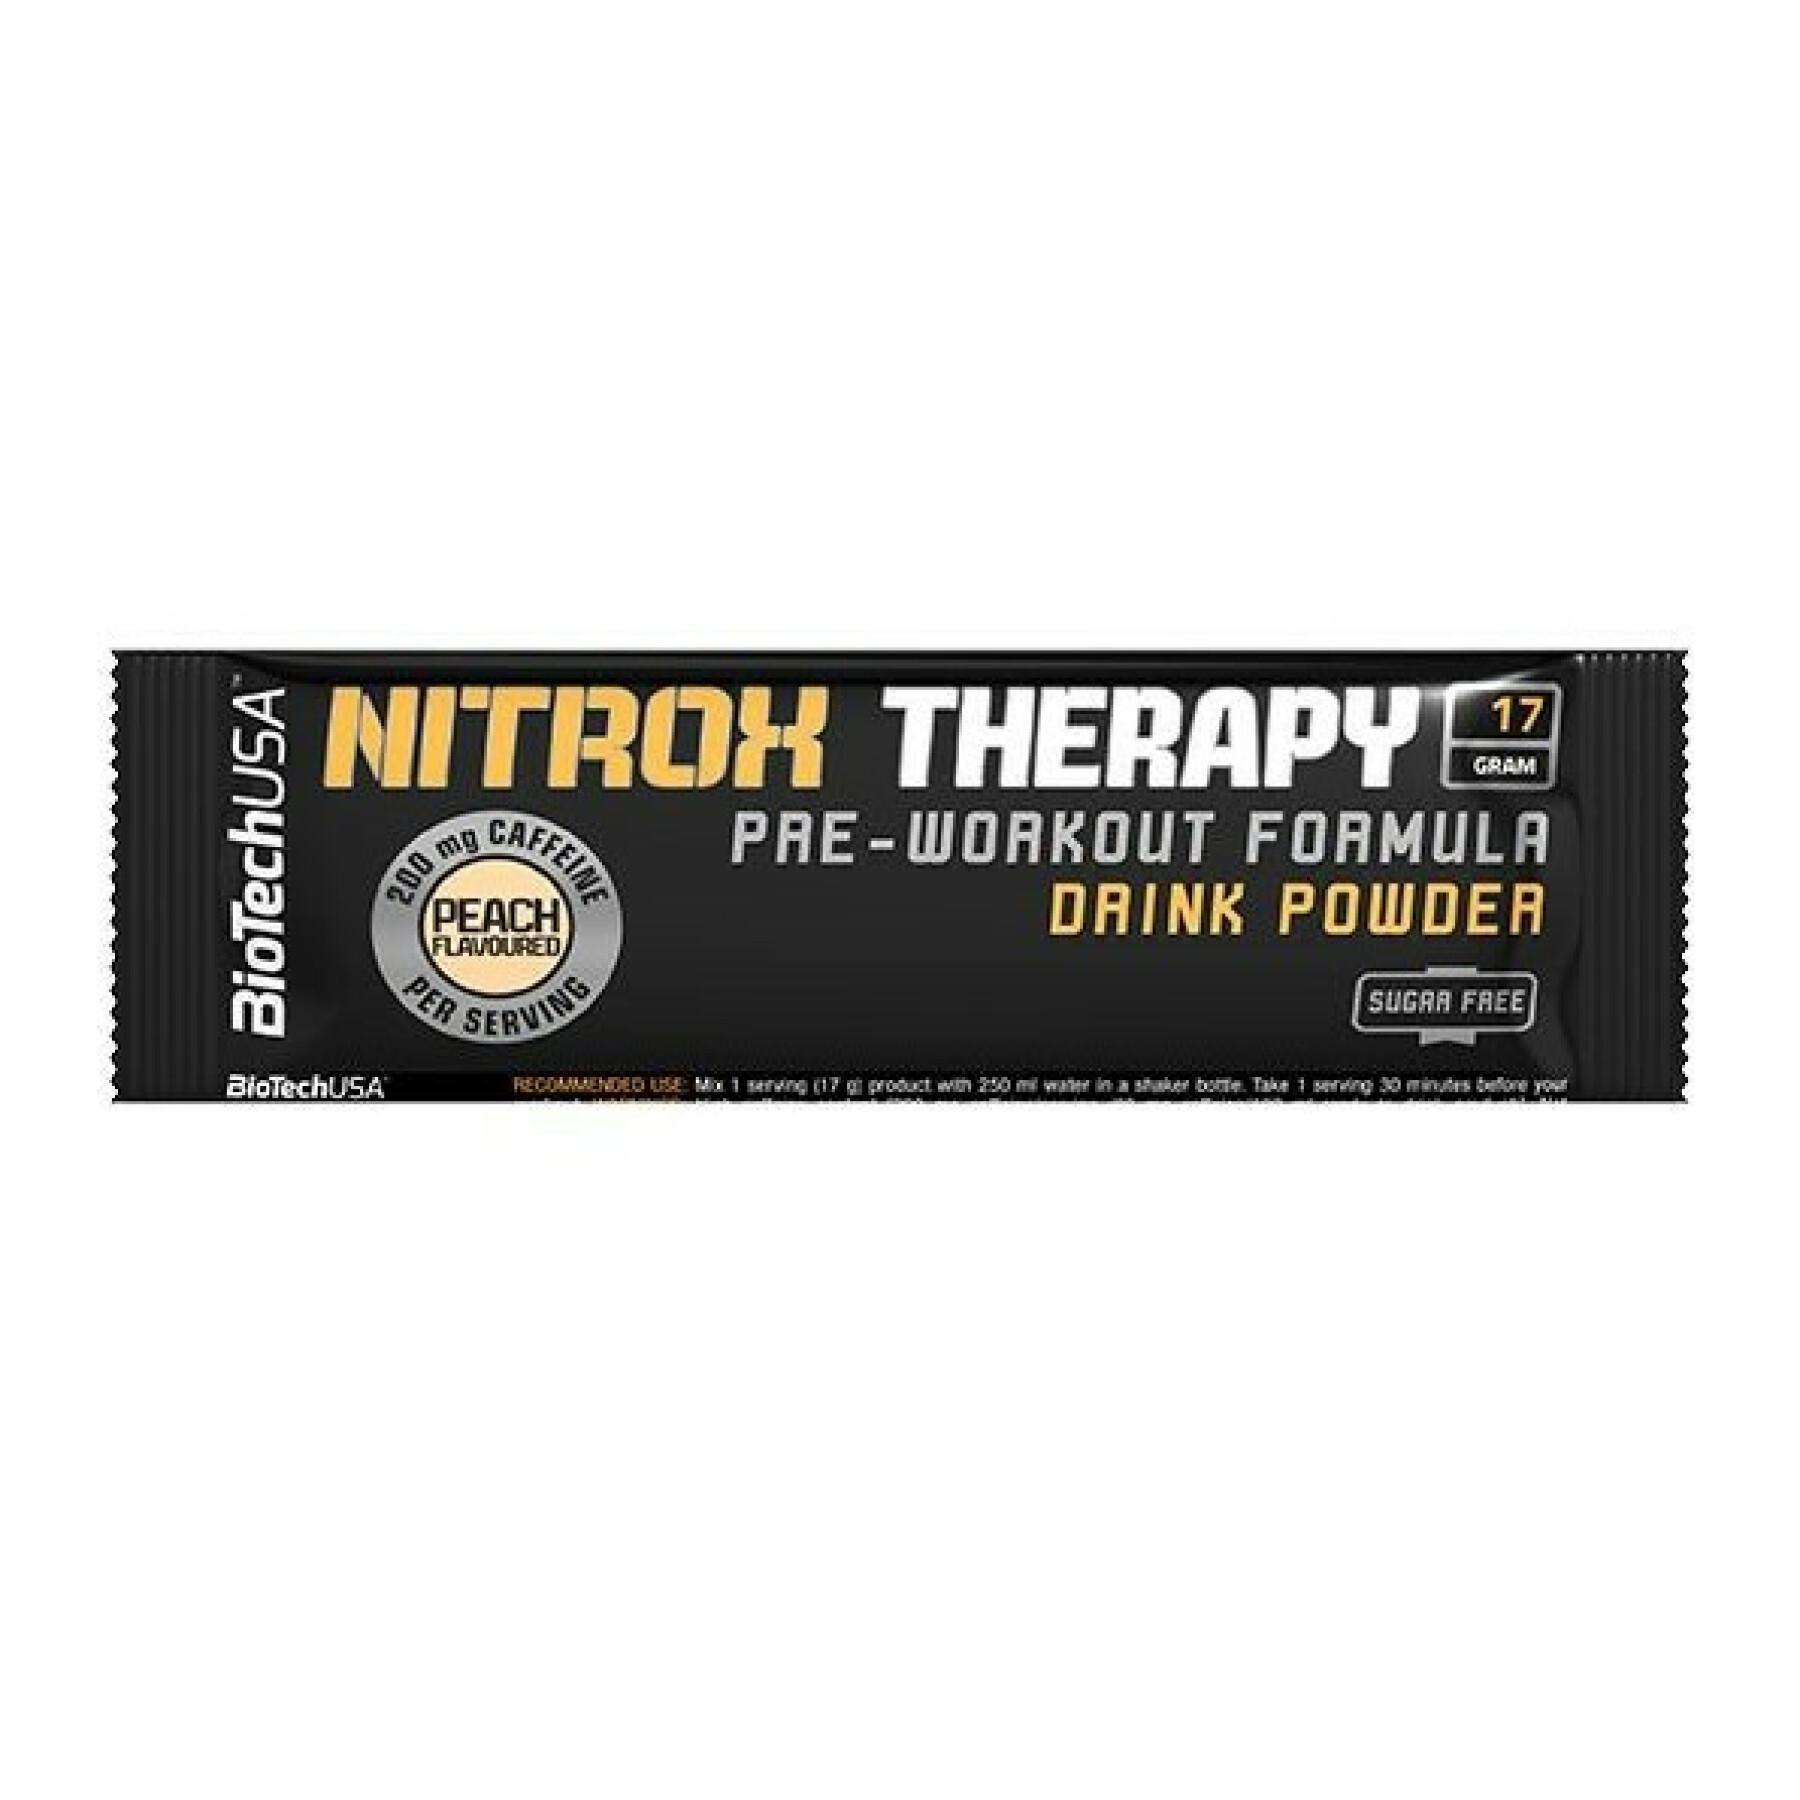 Paquete de 50 paquetes de refuerzo Biotech USA nitrox therapy - Fruits tropicaux - 17g